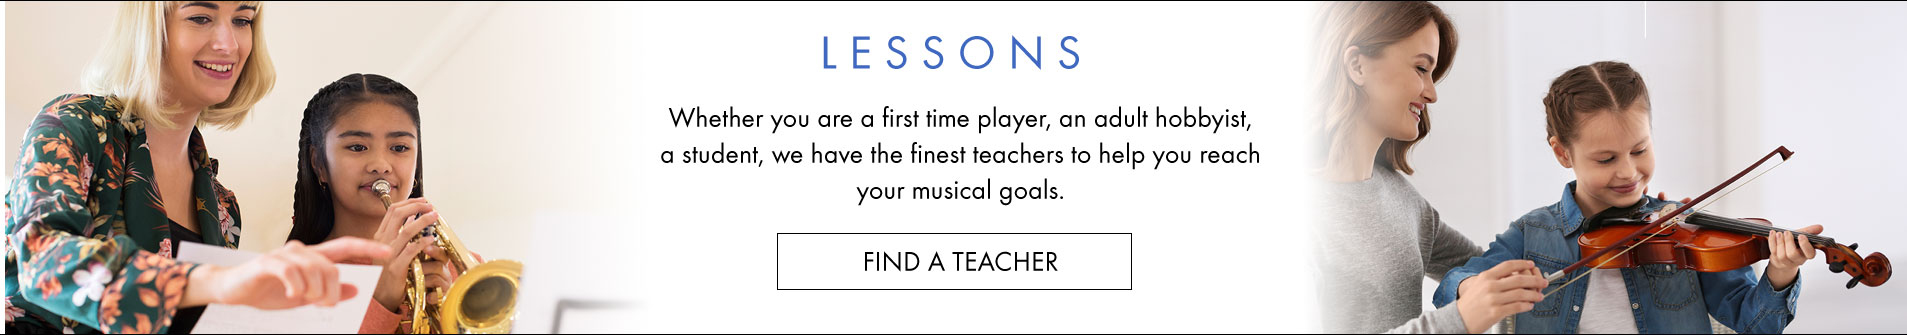 band-lessons.jpg